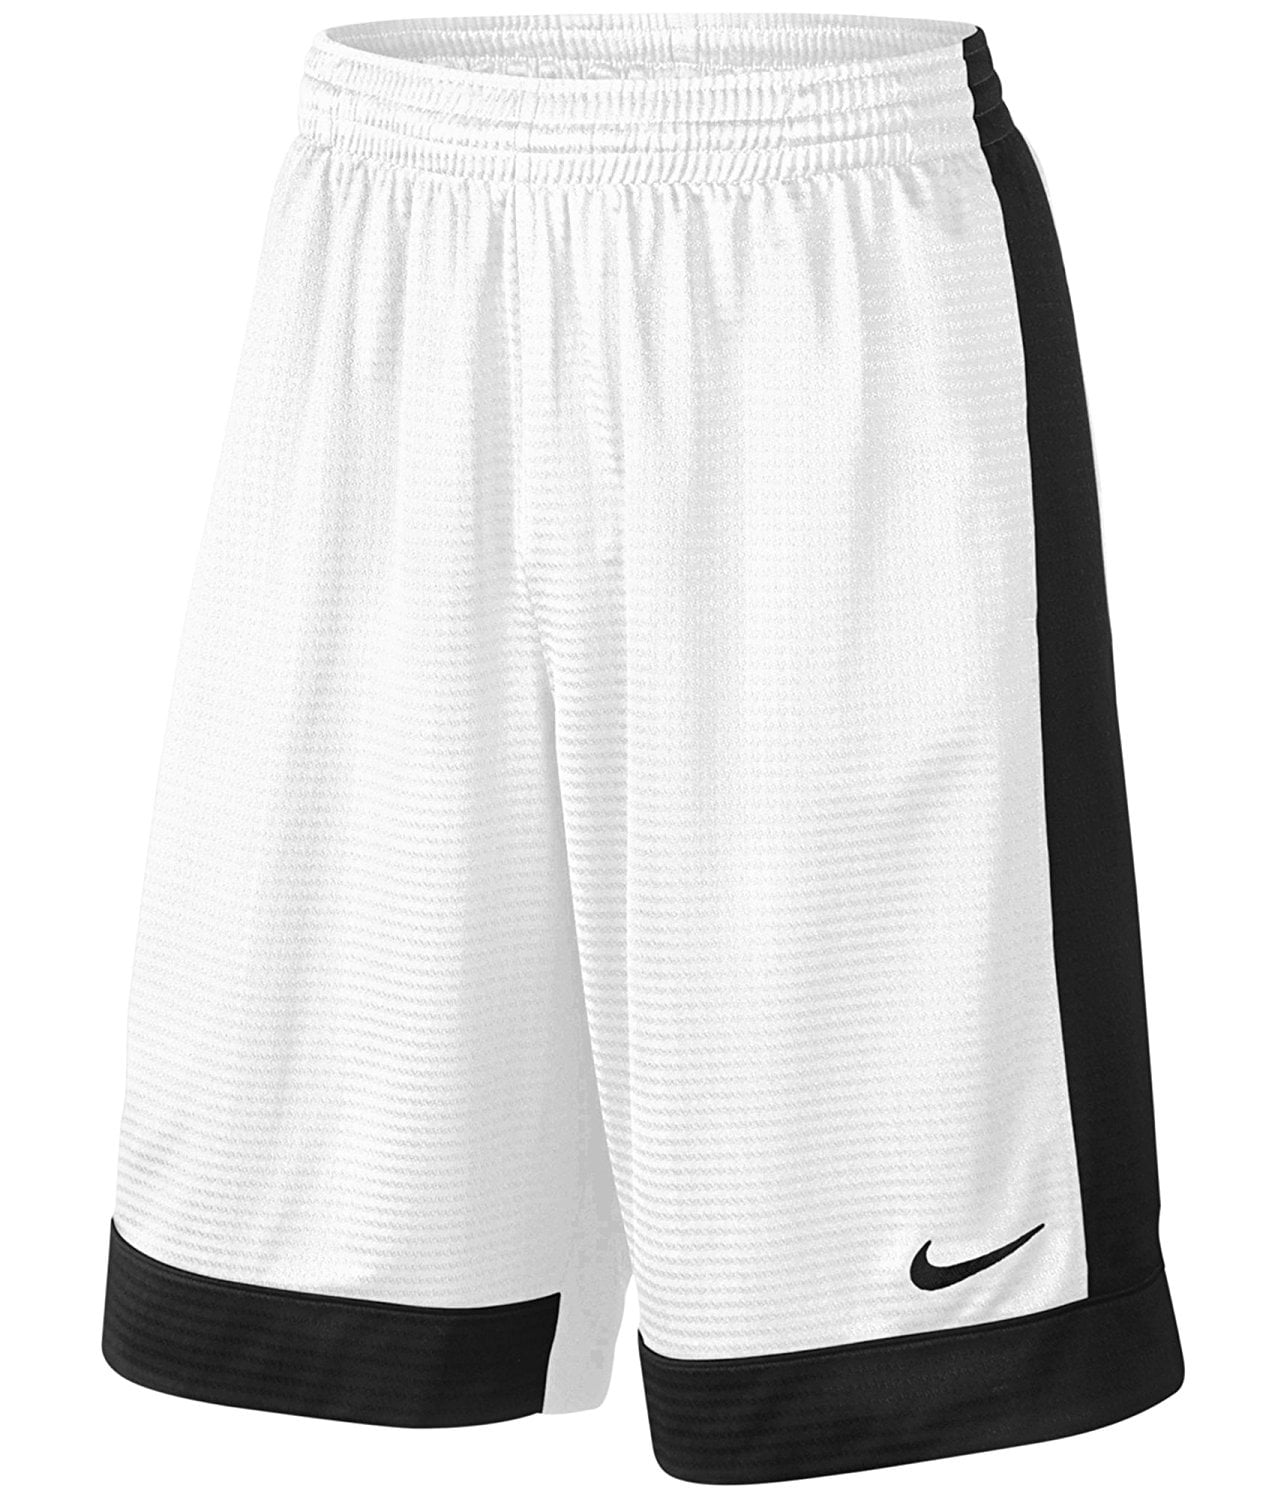 Nike Fastbreak White/Black Men's Basketball Shorts Size M - Walmart.com